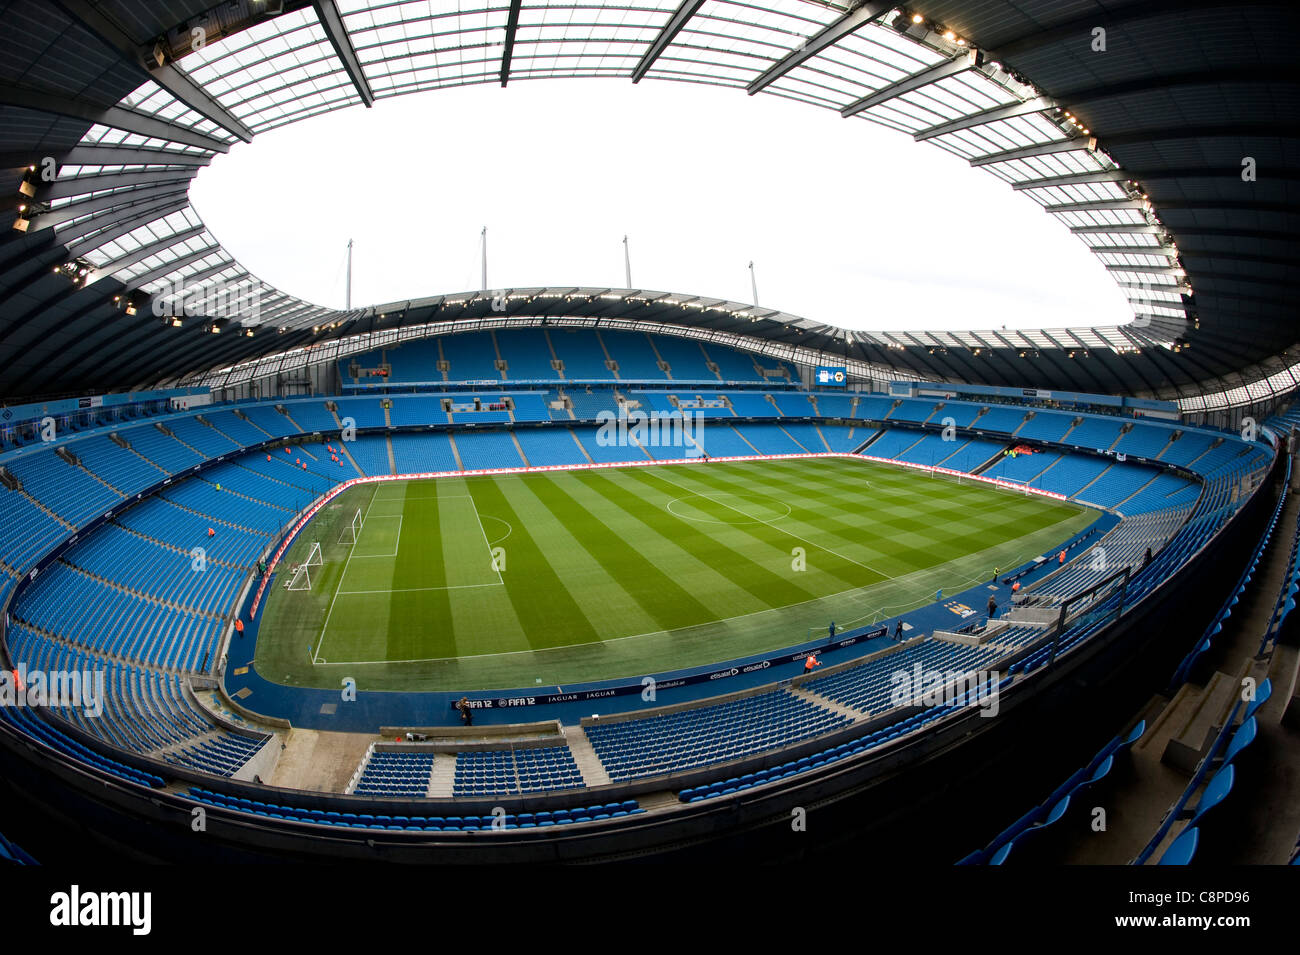 City of Manchester Stadium - Wikipedia